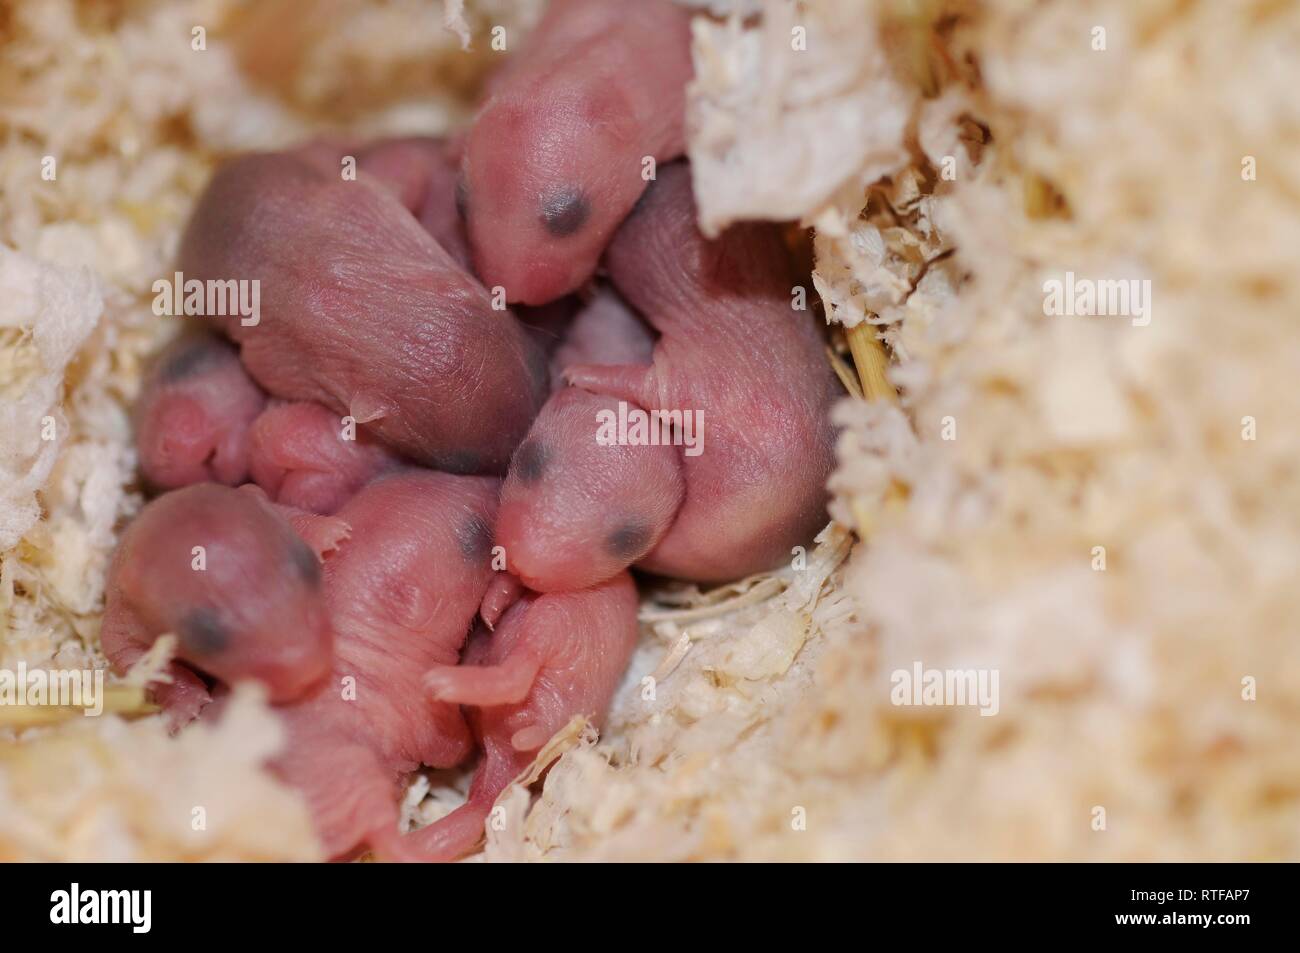 Djungarian hamsters (Phodopus sungorus), newborn naked animal babies in nest, Austria Stock Photo